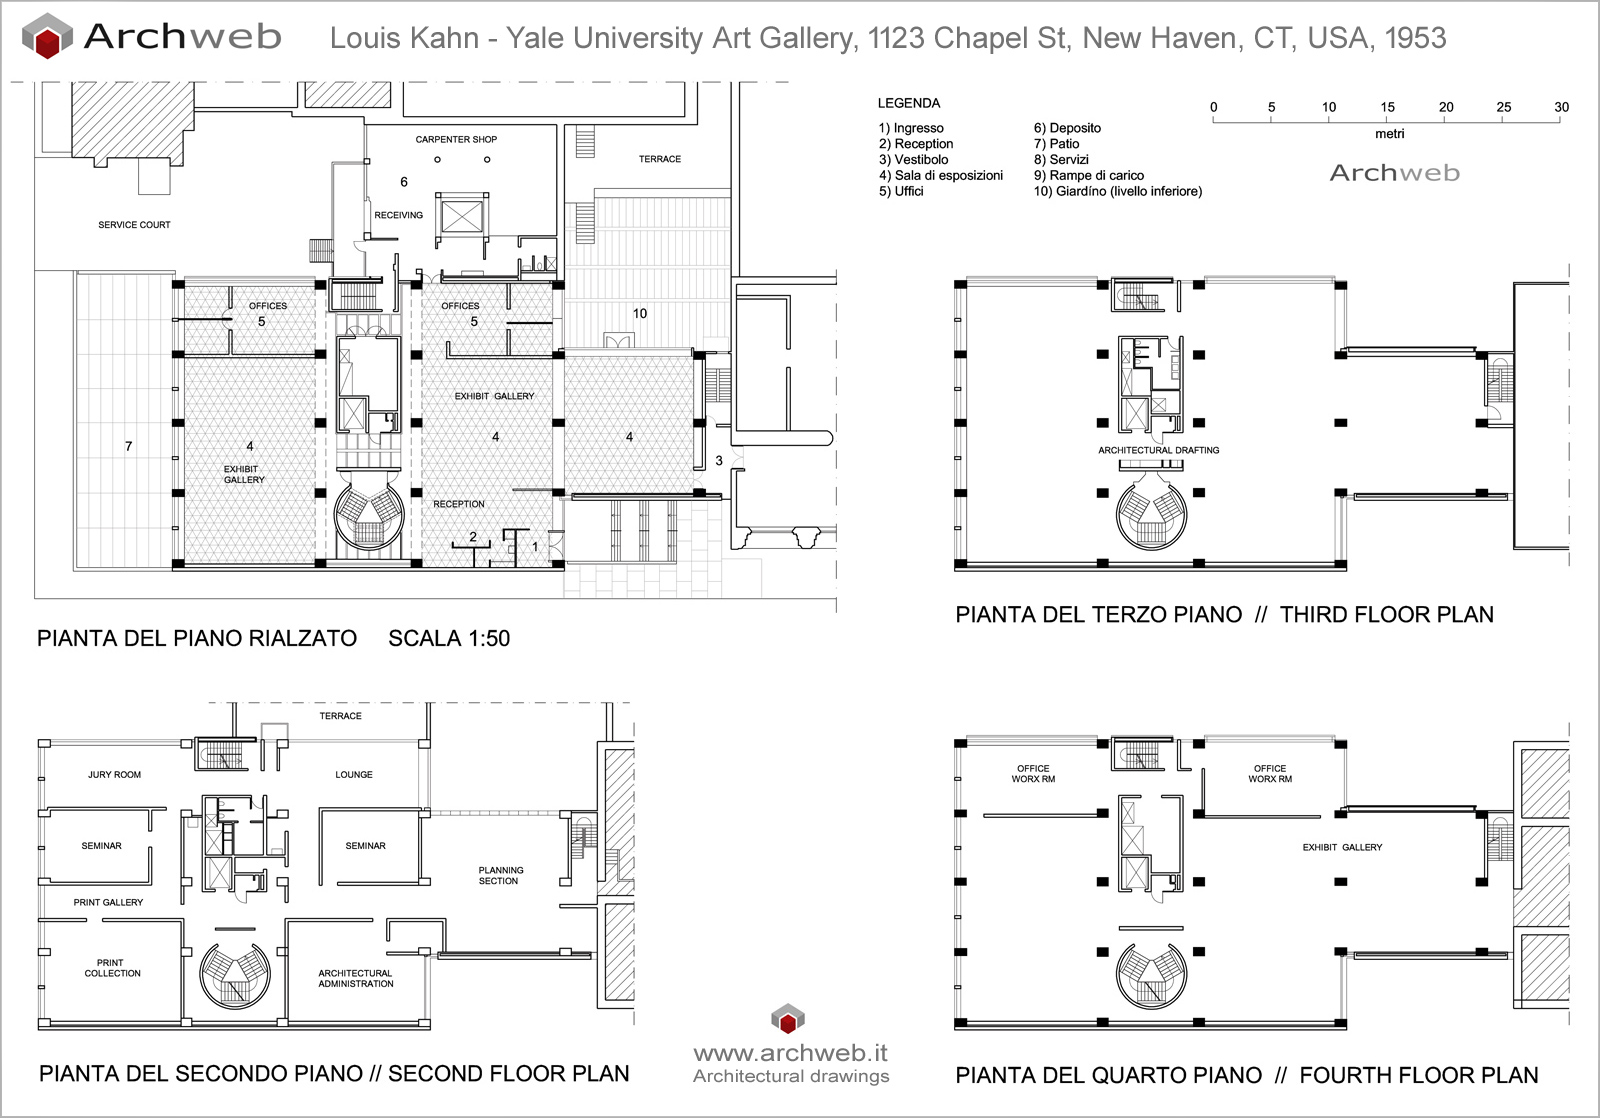 Yale University Art Gallery drawings plan